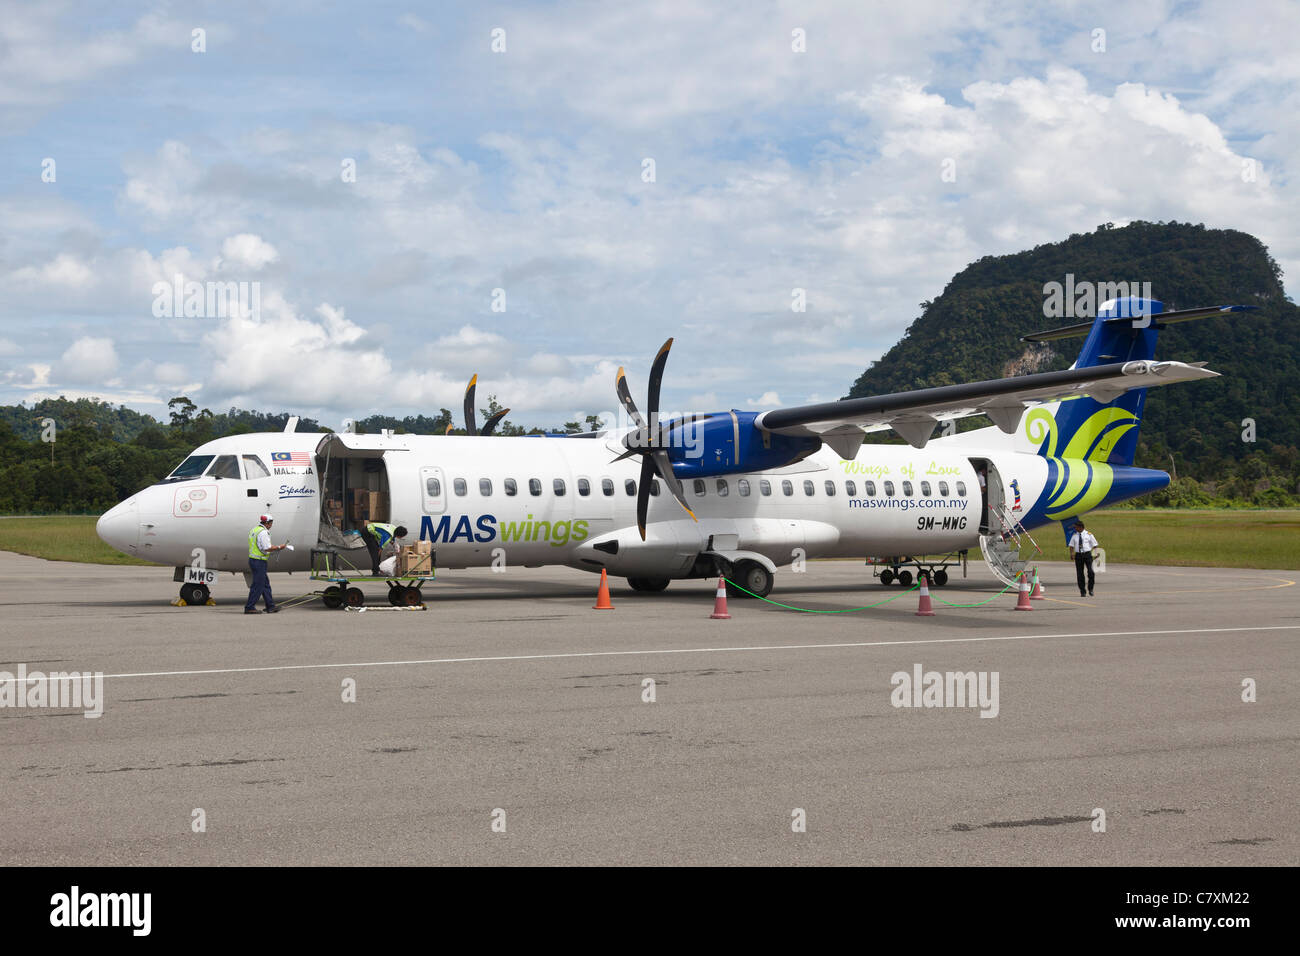 ATR ATR-72-500 reg. 9M-MWG betriebenen MASwings, am Flughafen von Mulu, Sarawak, Malaysia Borneo Stockfoto